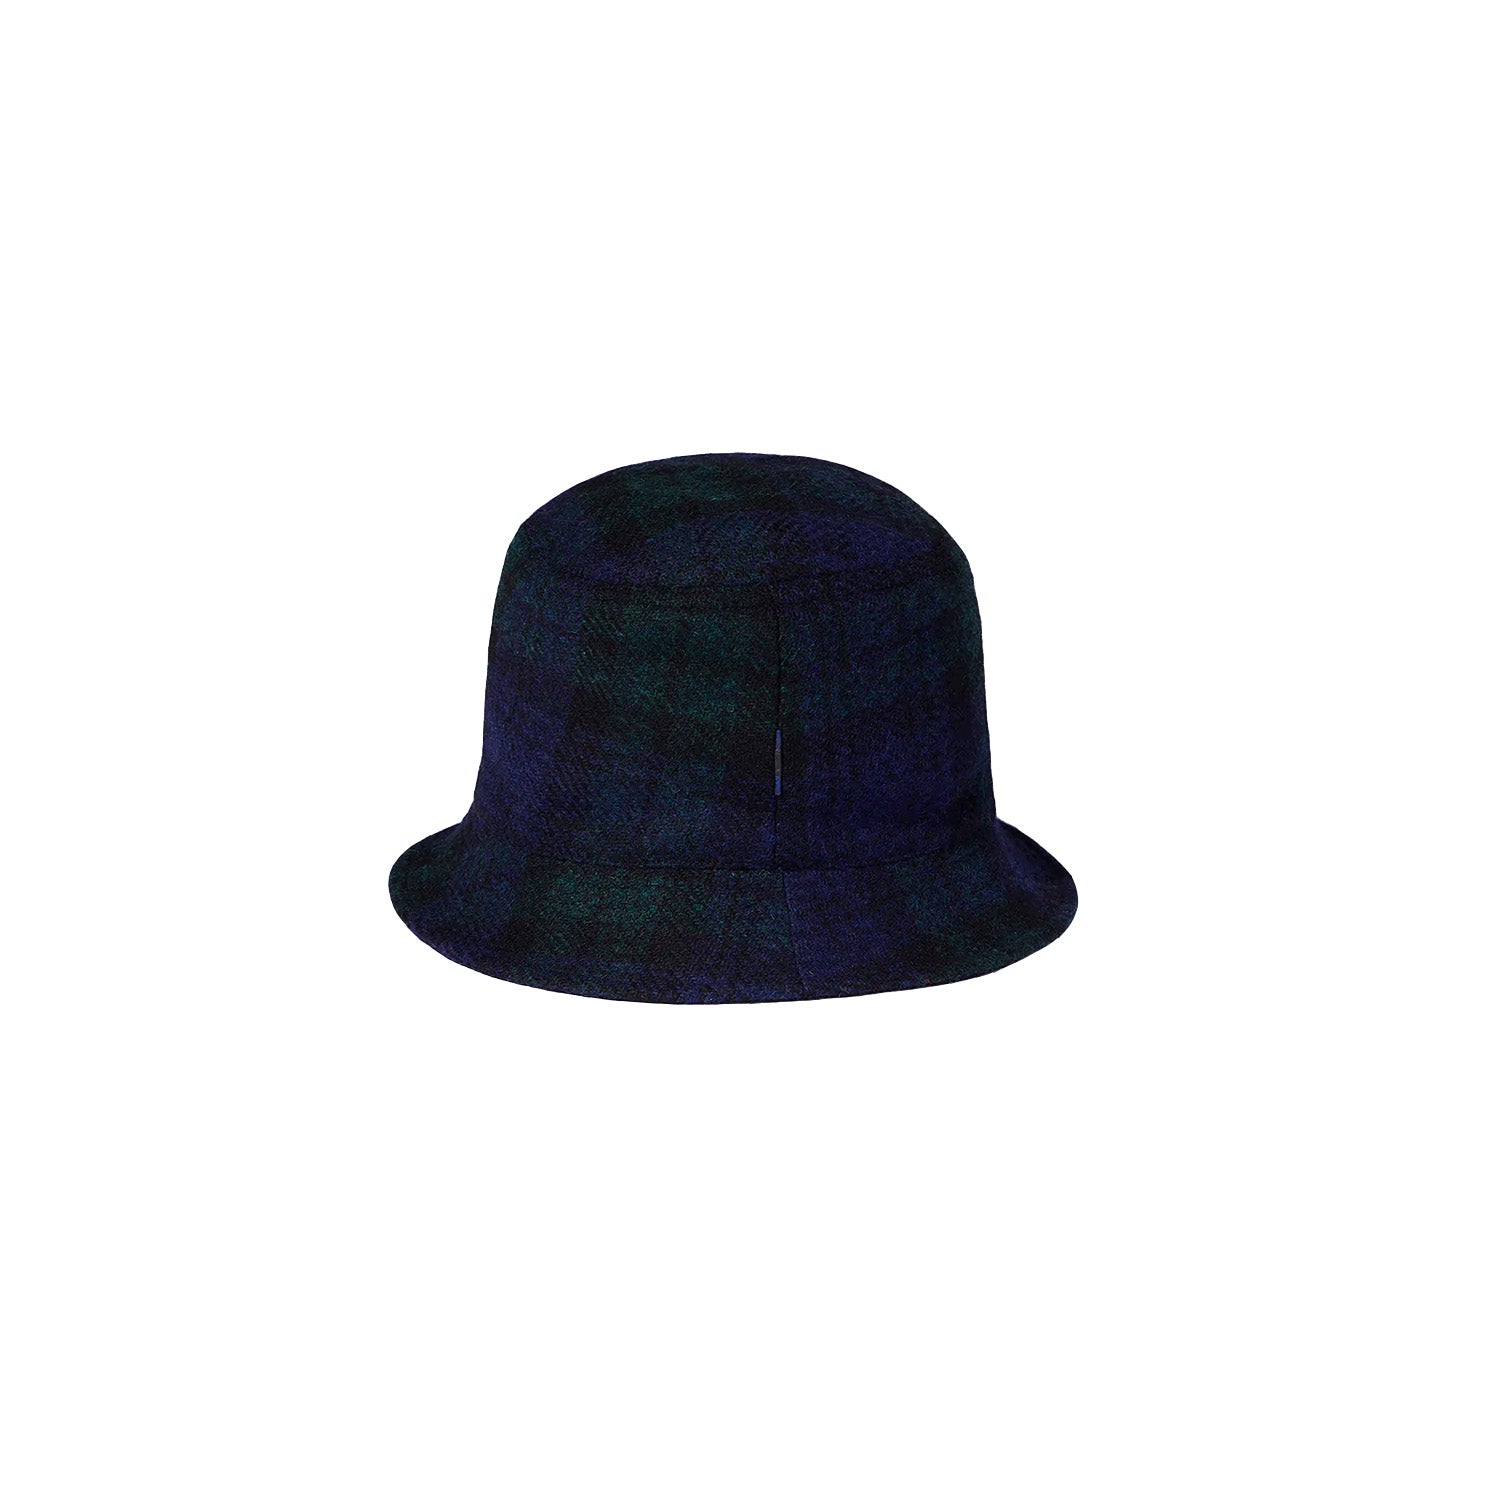 Wool High Bucket Hat (Black Watch Check)